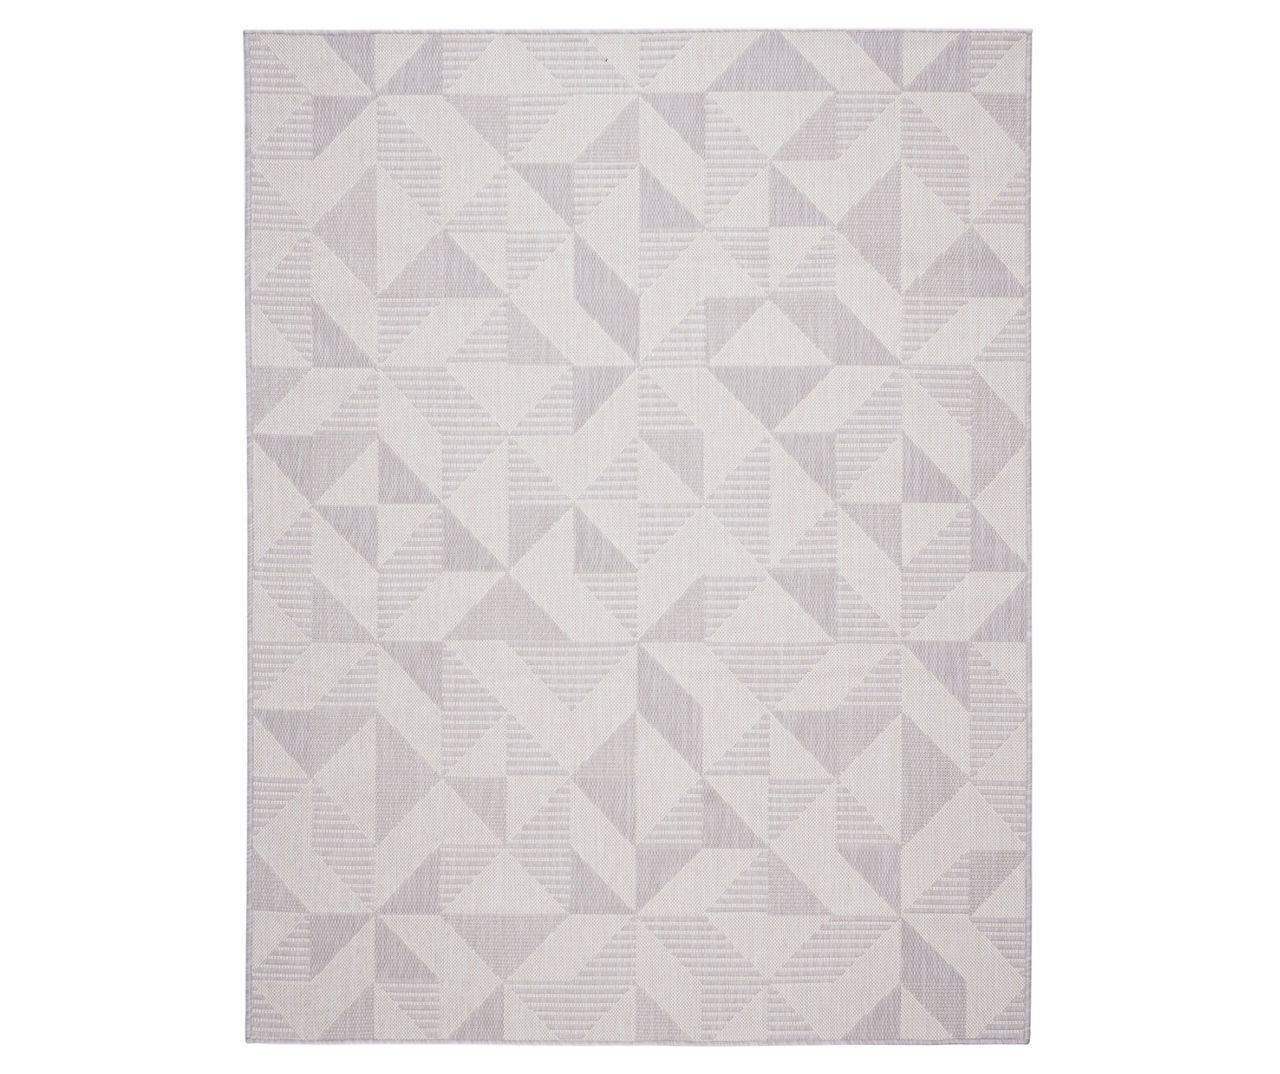 Pavero Gray & White Geometric Outdoor Area Rug, (5' x 7')